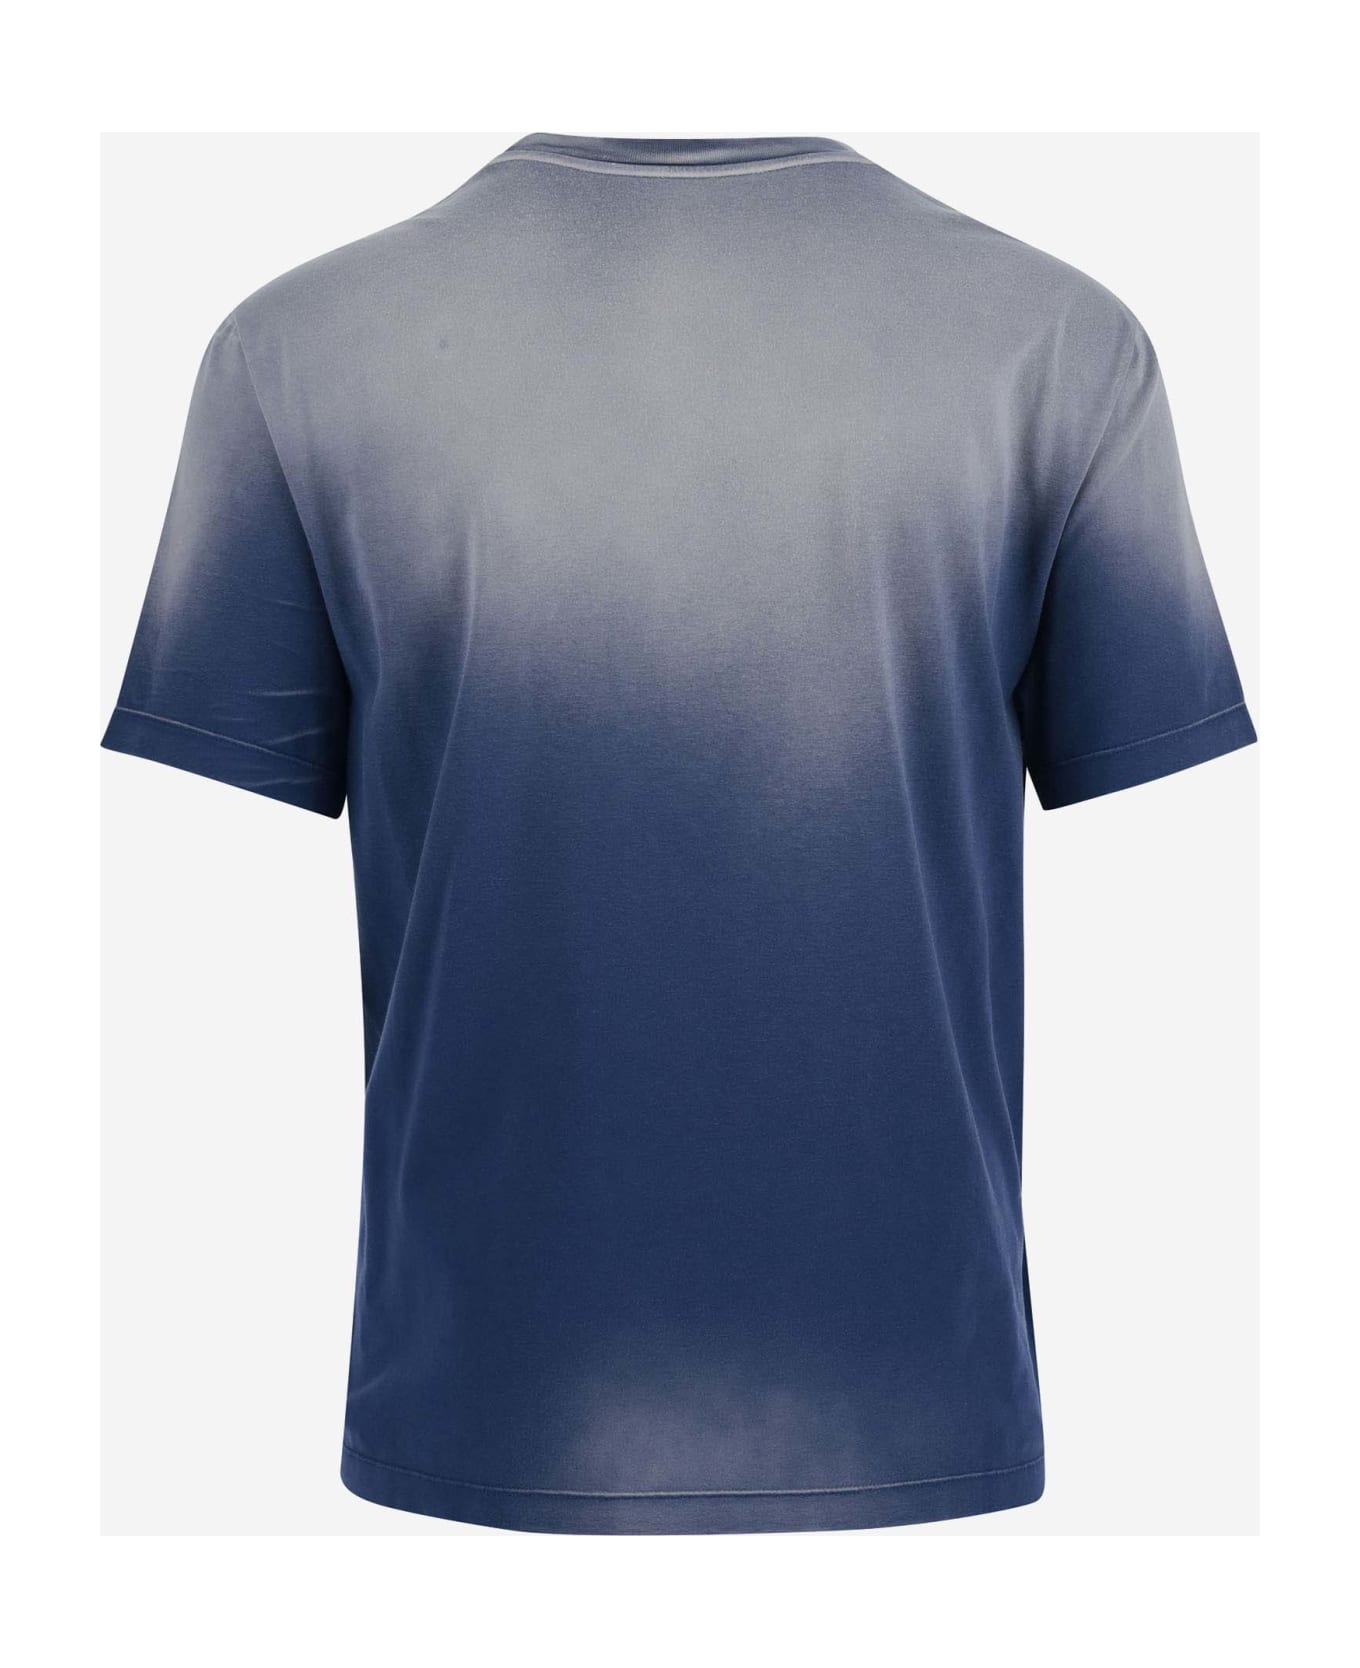 Versace Cotton T-shirt With Logo - ROYAL BLUE (Blue)